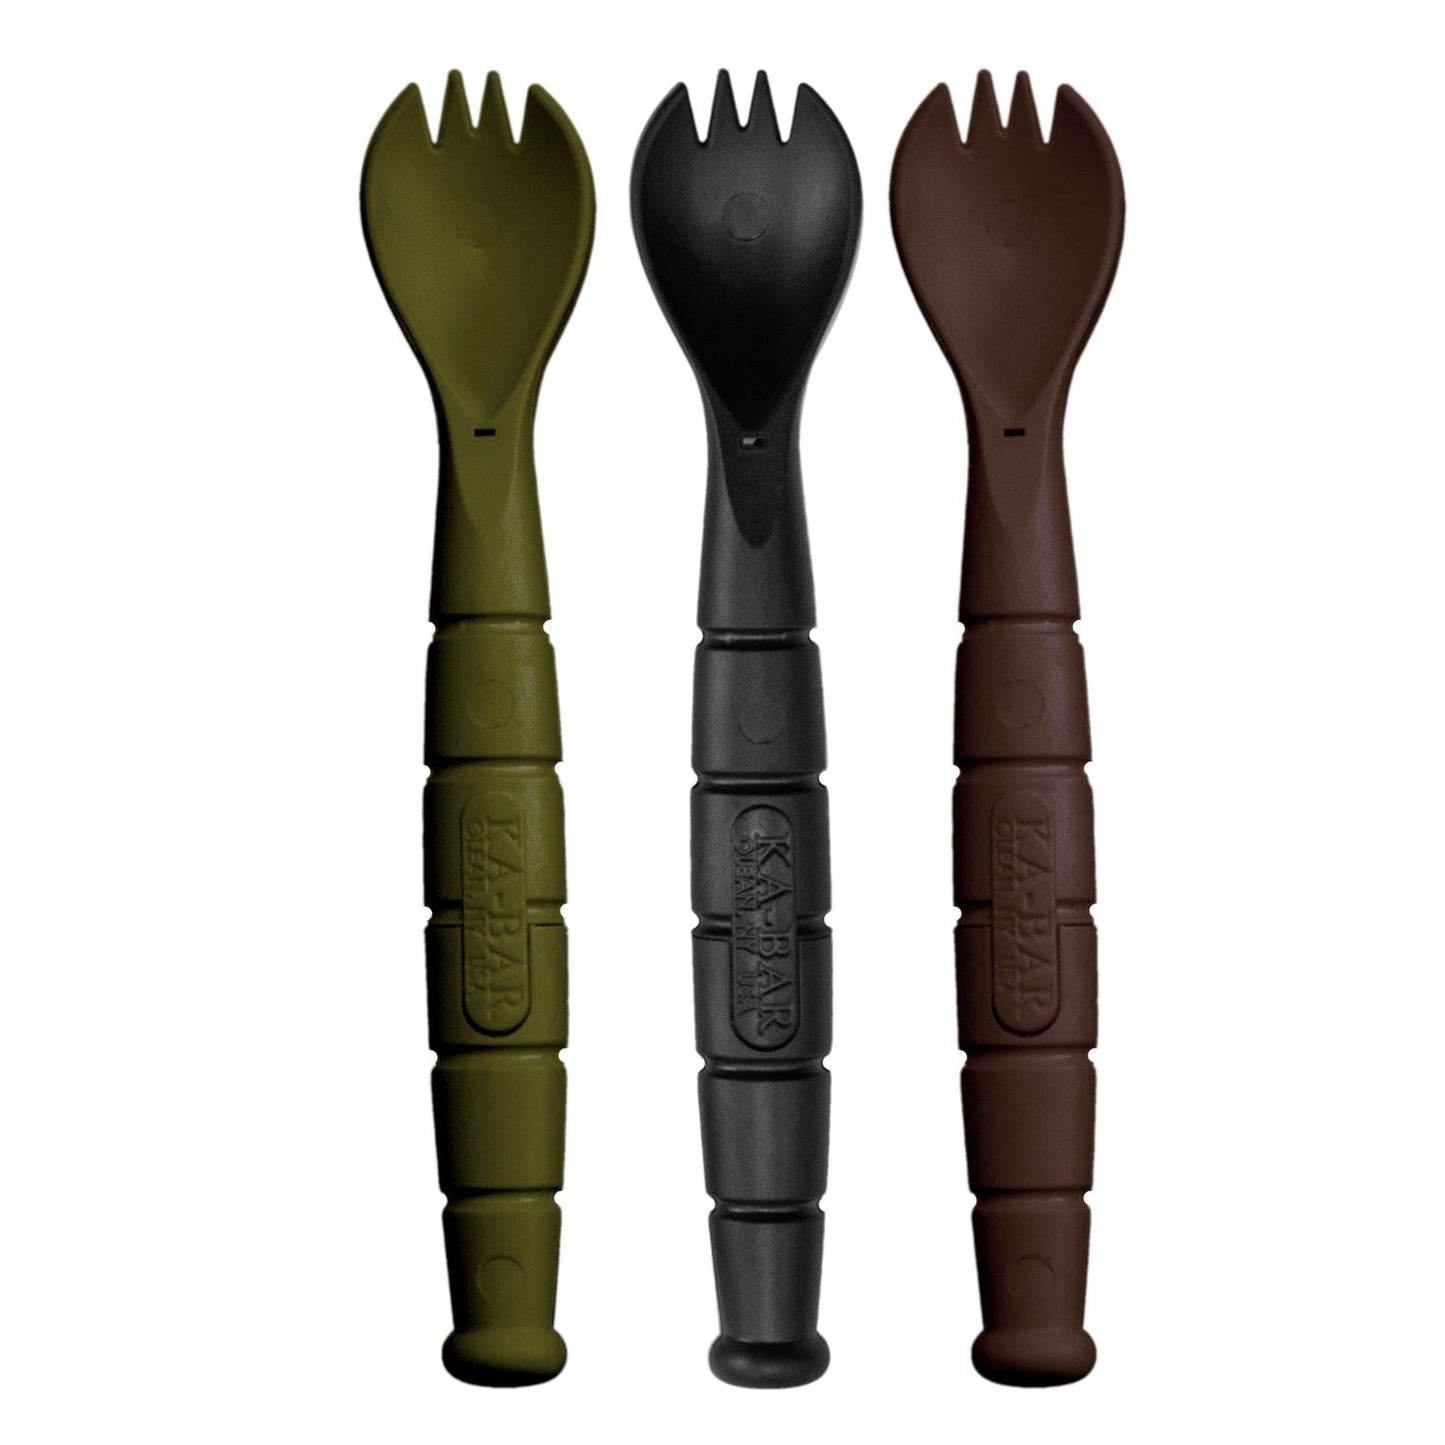 KA-BAR Tactical Spork (Spoon Fork Knife) Field Kit 3 Pack by Texas Fowlers